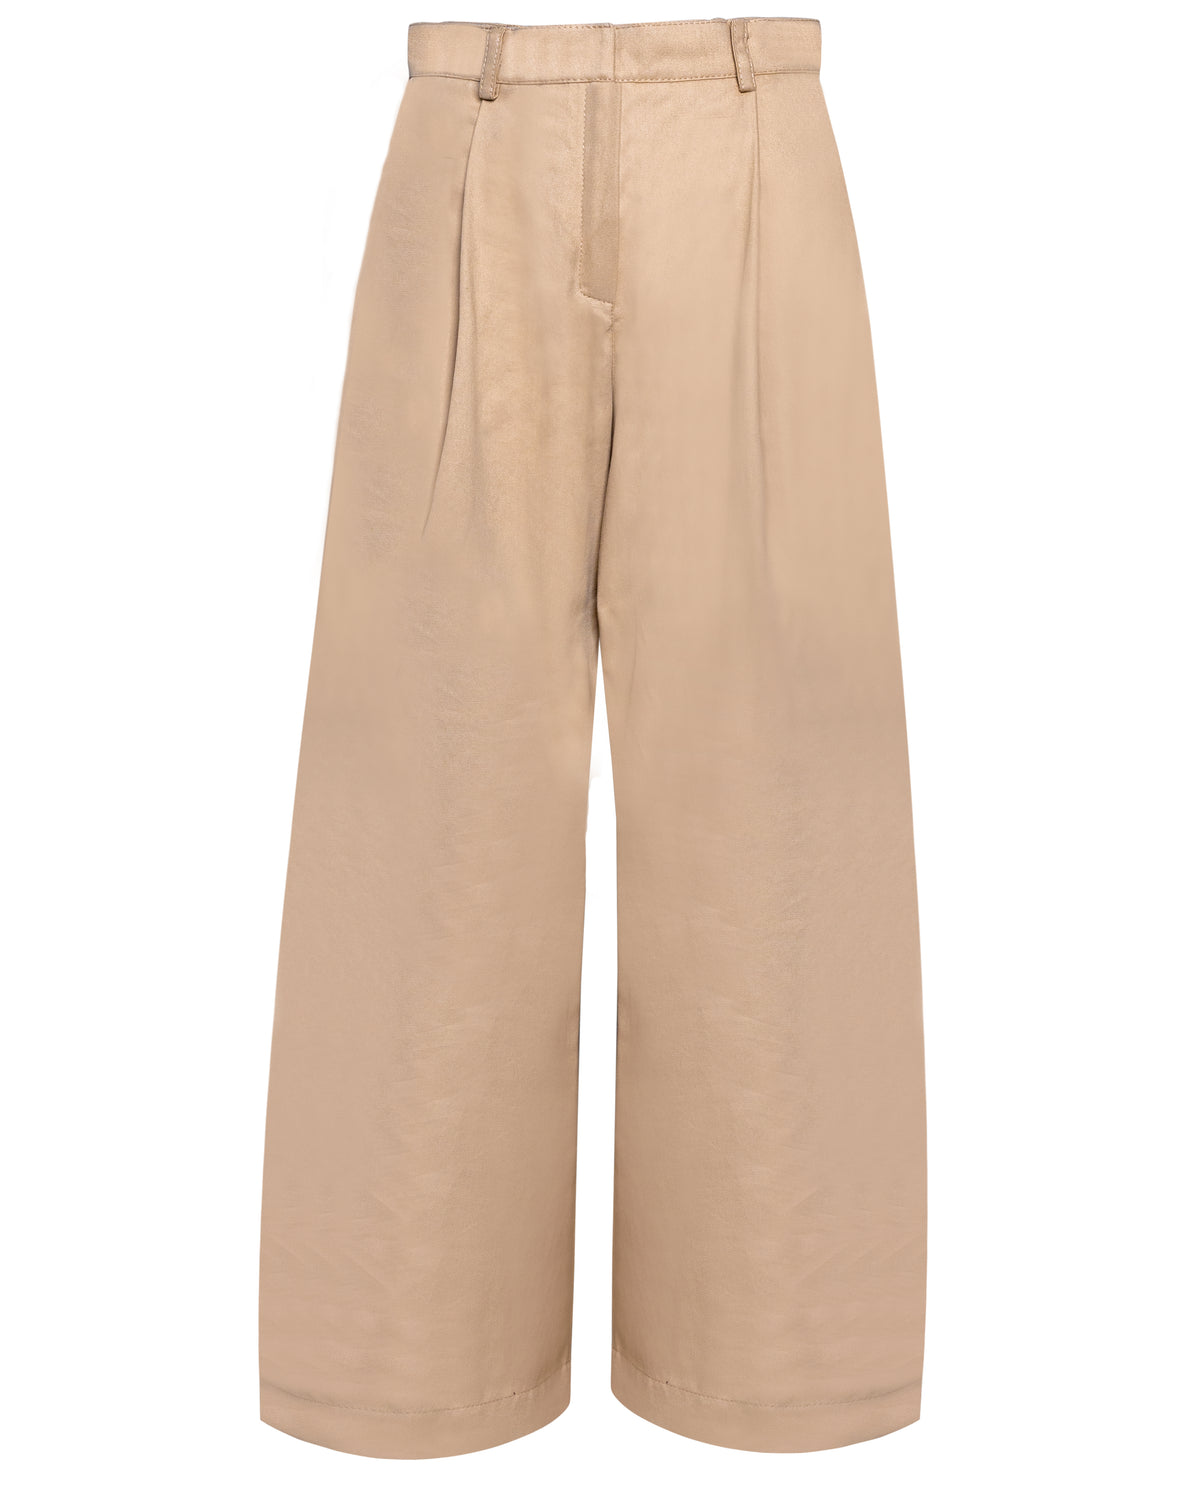 classic high waisted wide leg beige trouser